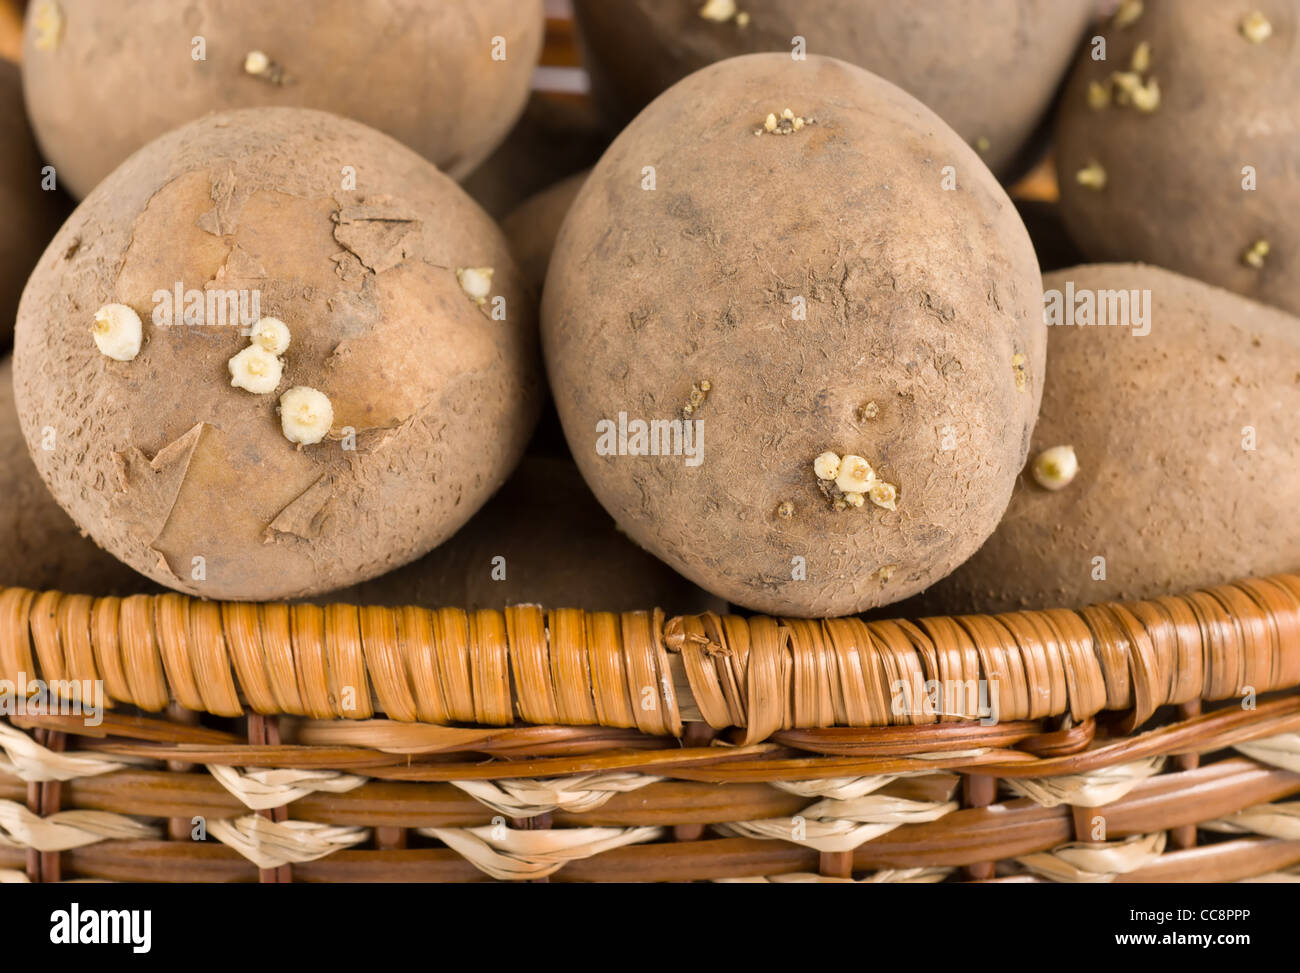 Raw potato in a wicker wooden basket Stock Photo